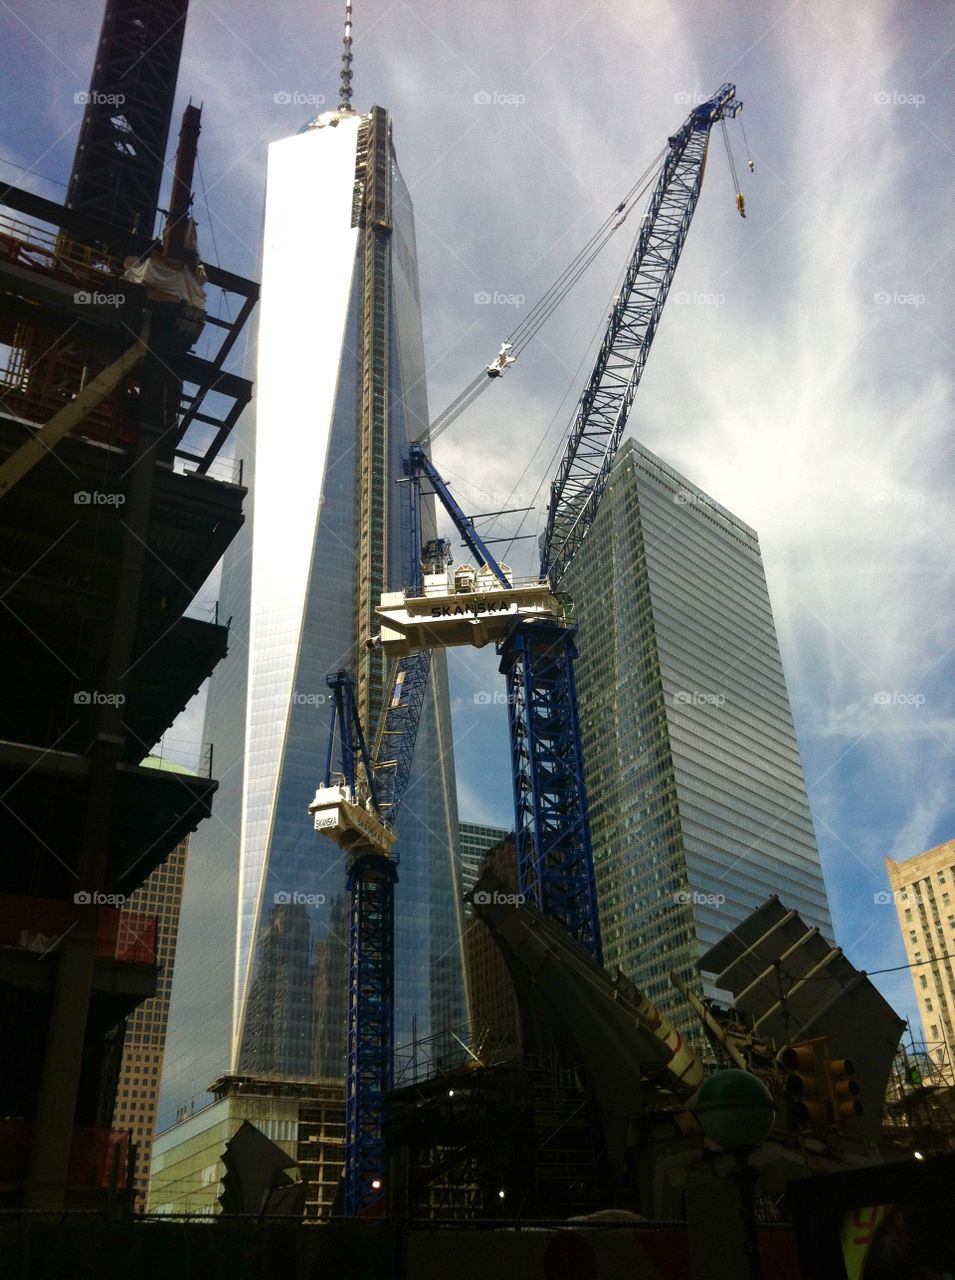 Rising glass. The Fulton Street transit hub rises alongside the Freedom Tower